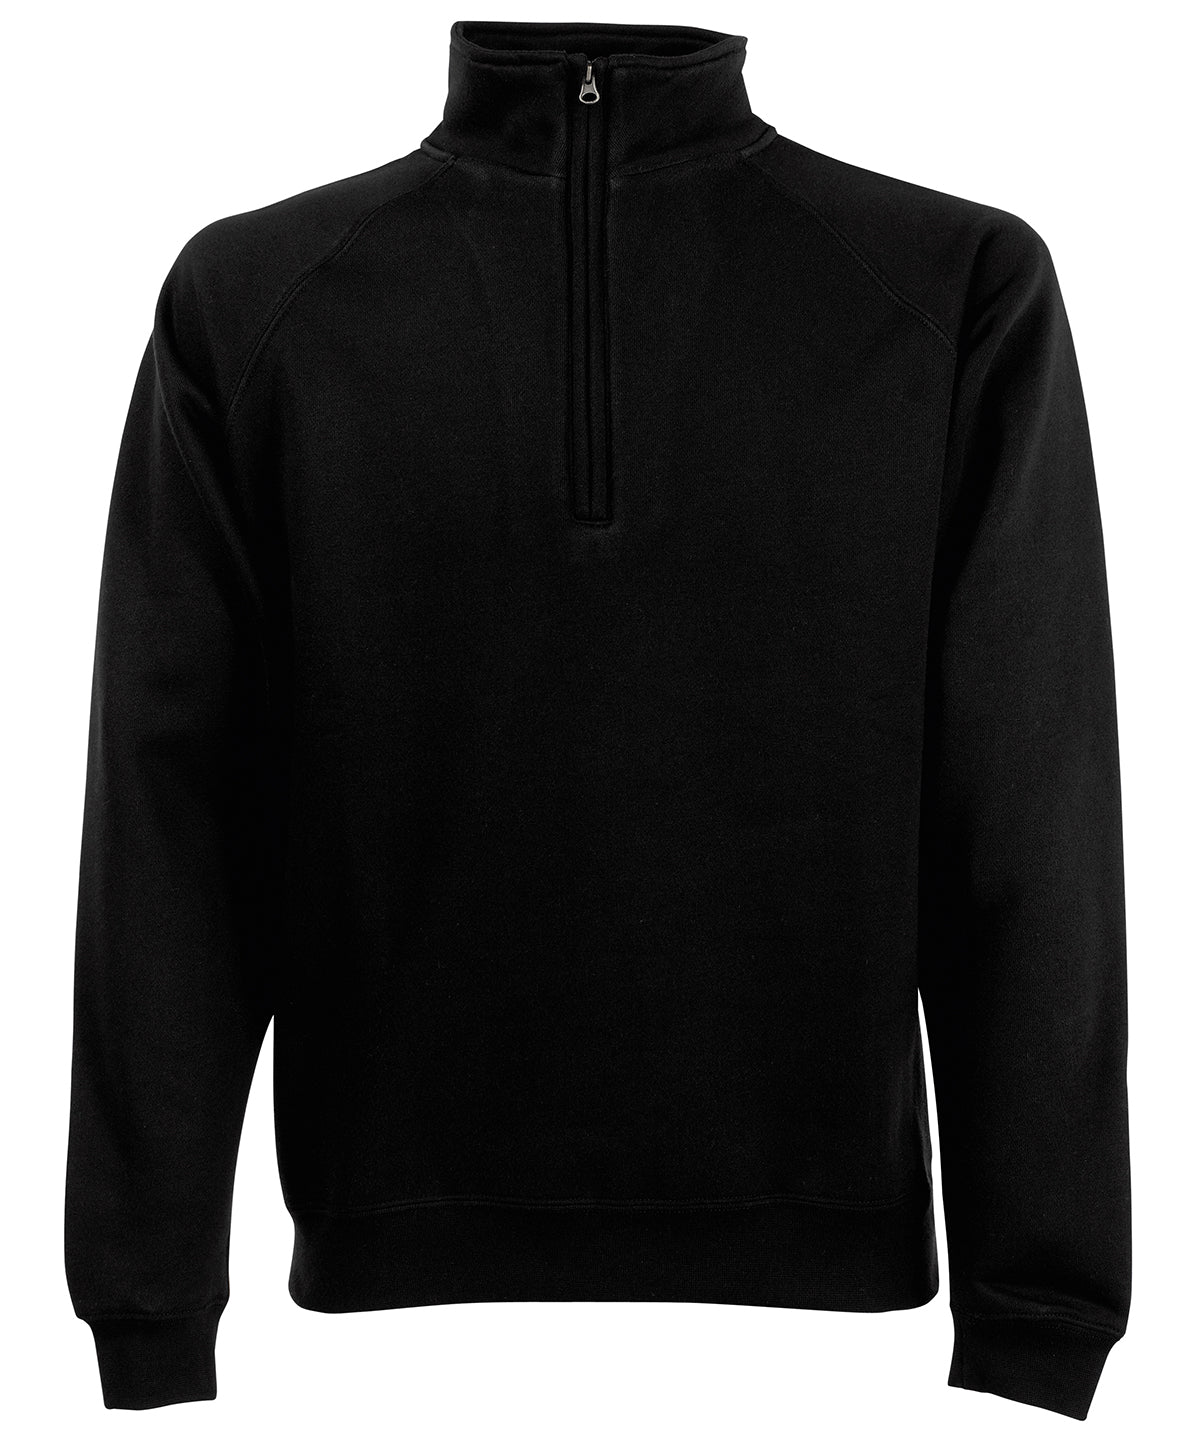 Personalised Sweatshirts - Black Fruit of the Loom Classic 80/20 zip neck sweatshirt